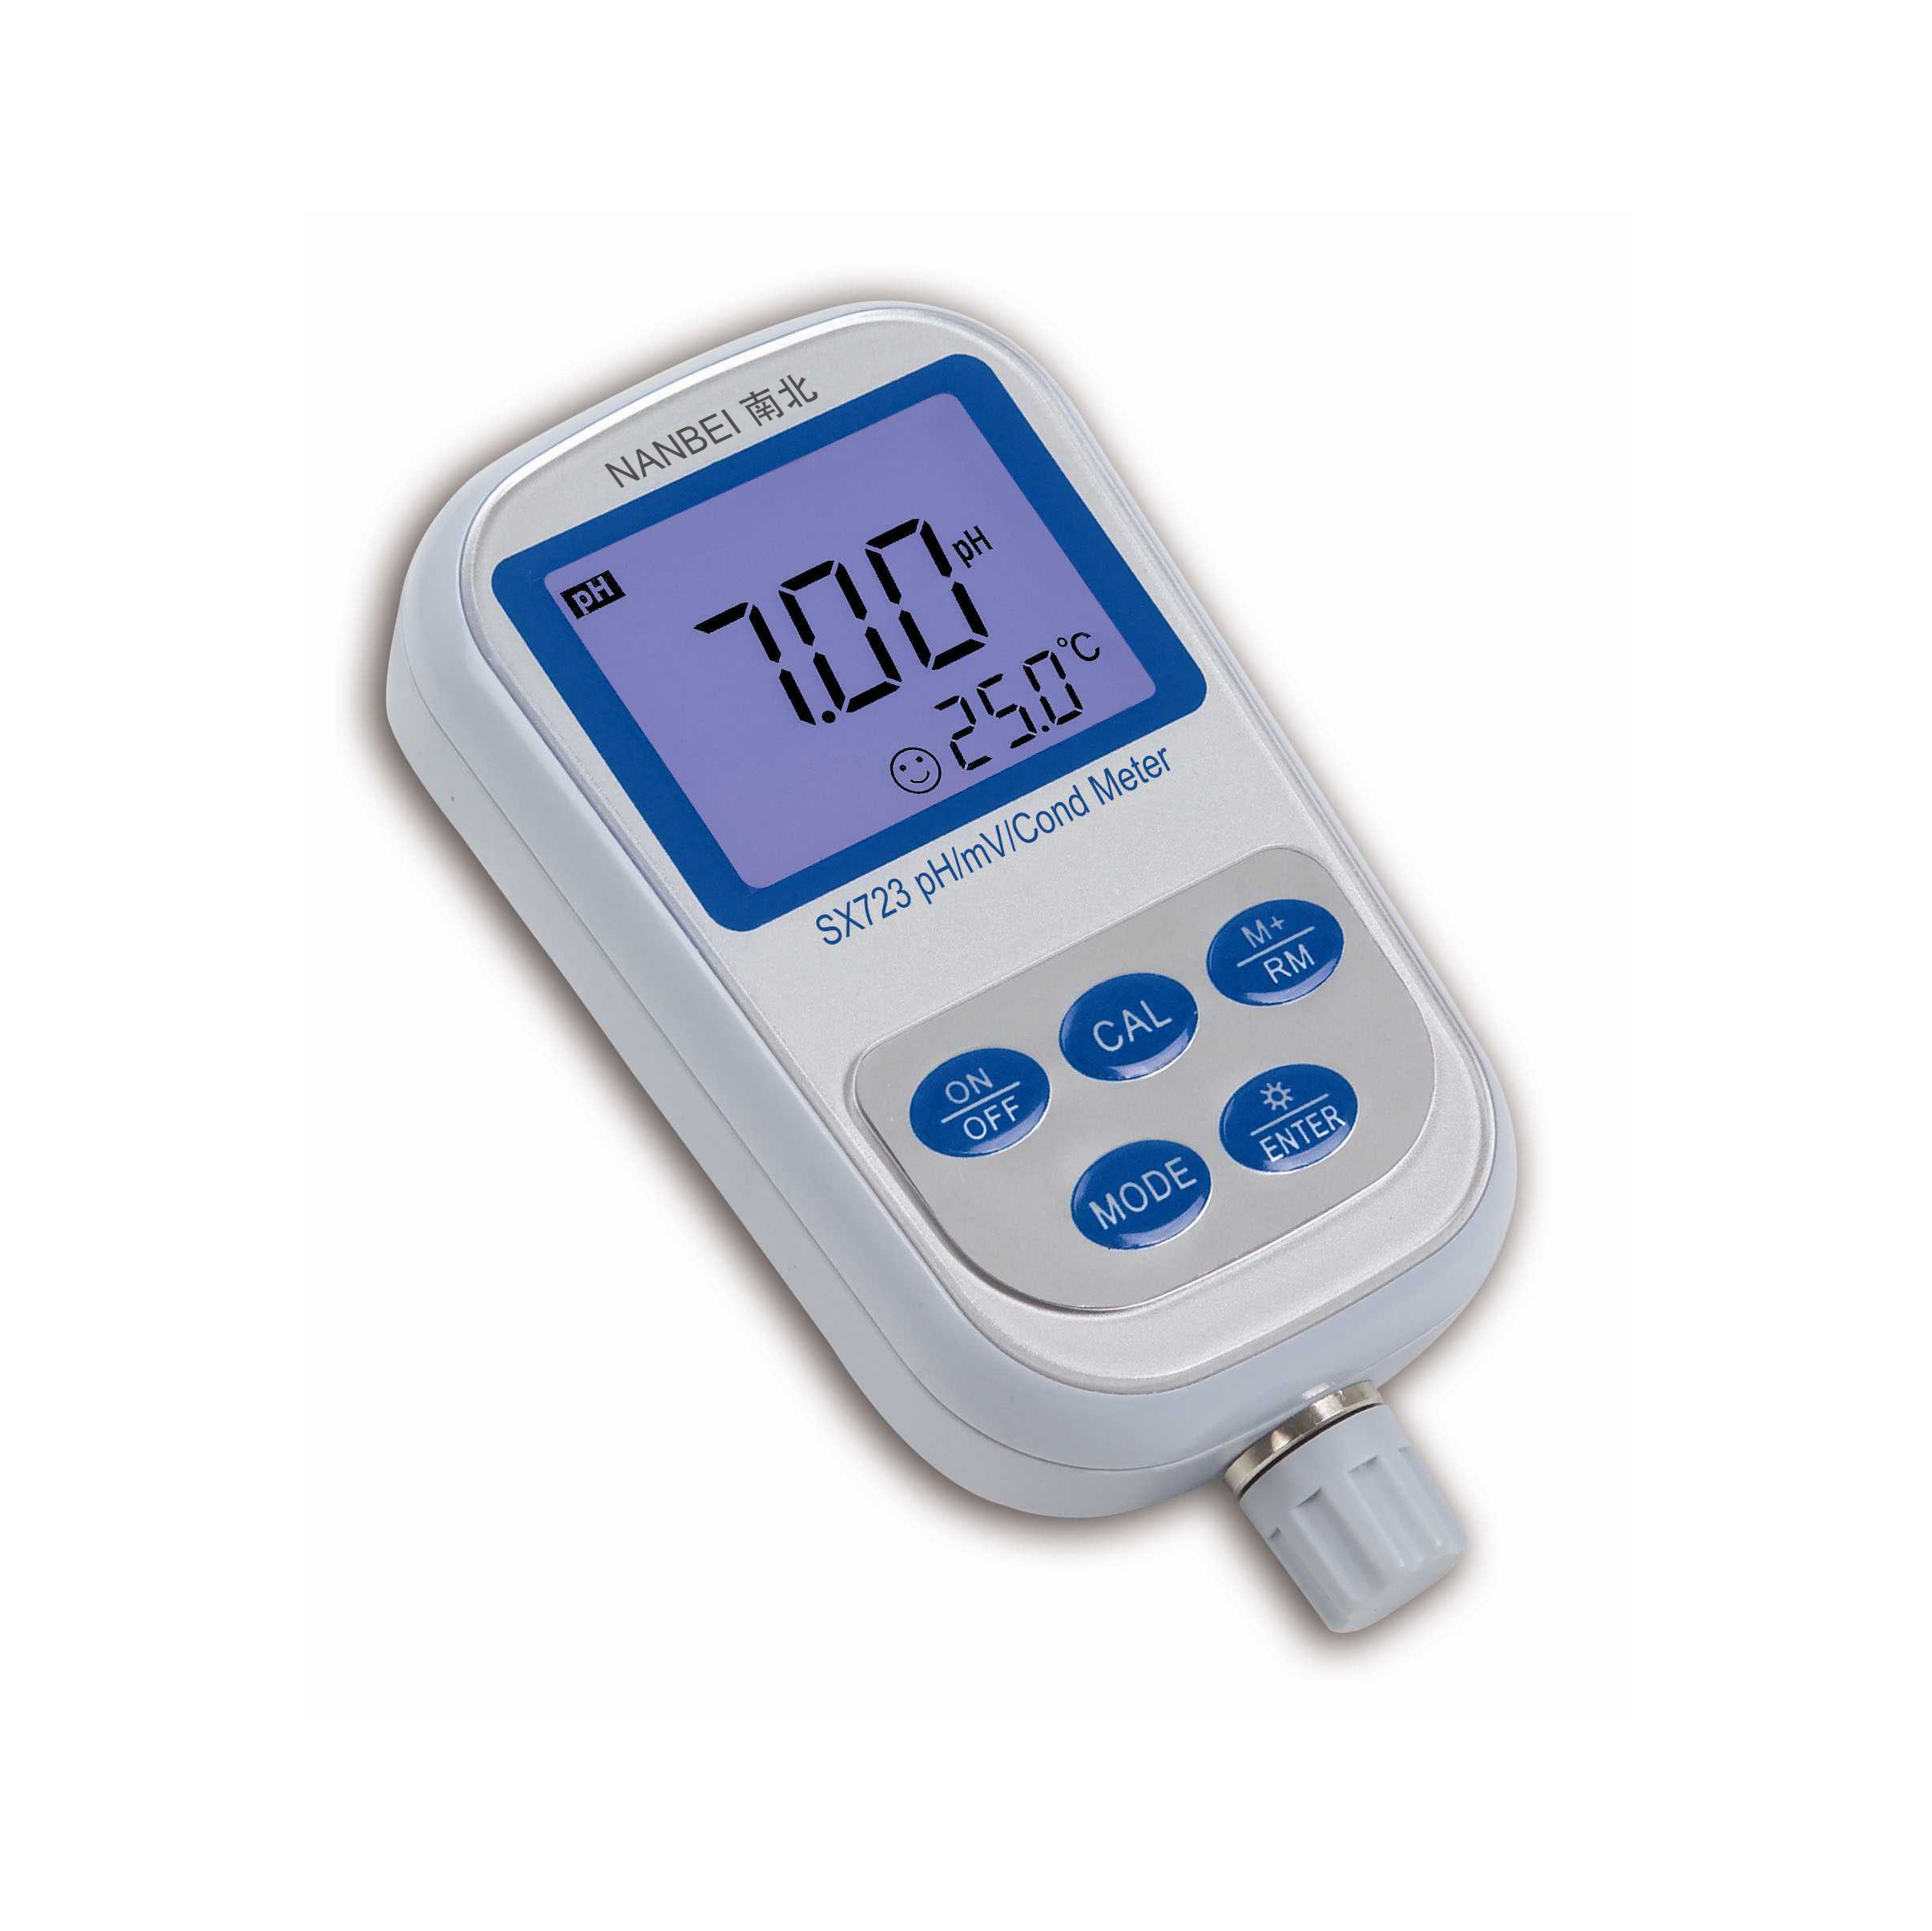 SX725 Portable pH / Meter Oksigen Terlarut